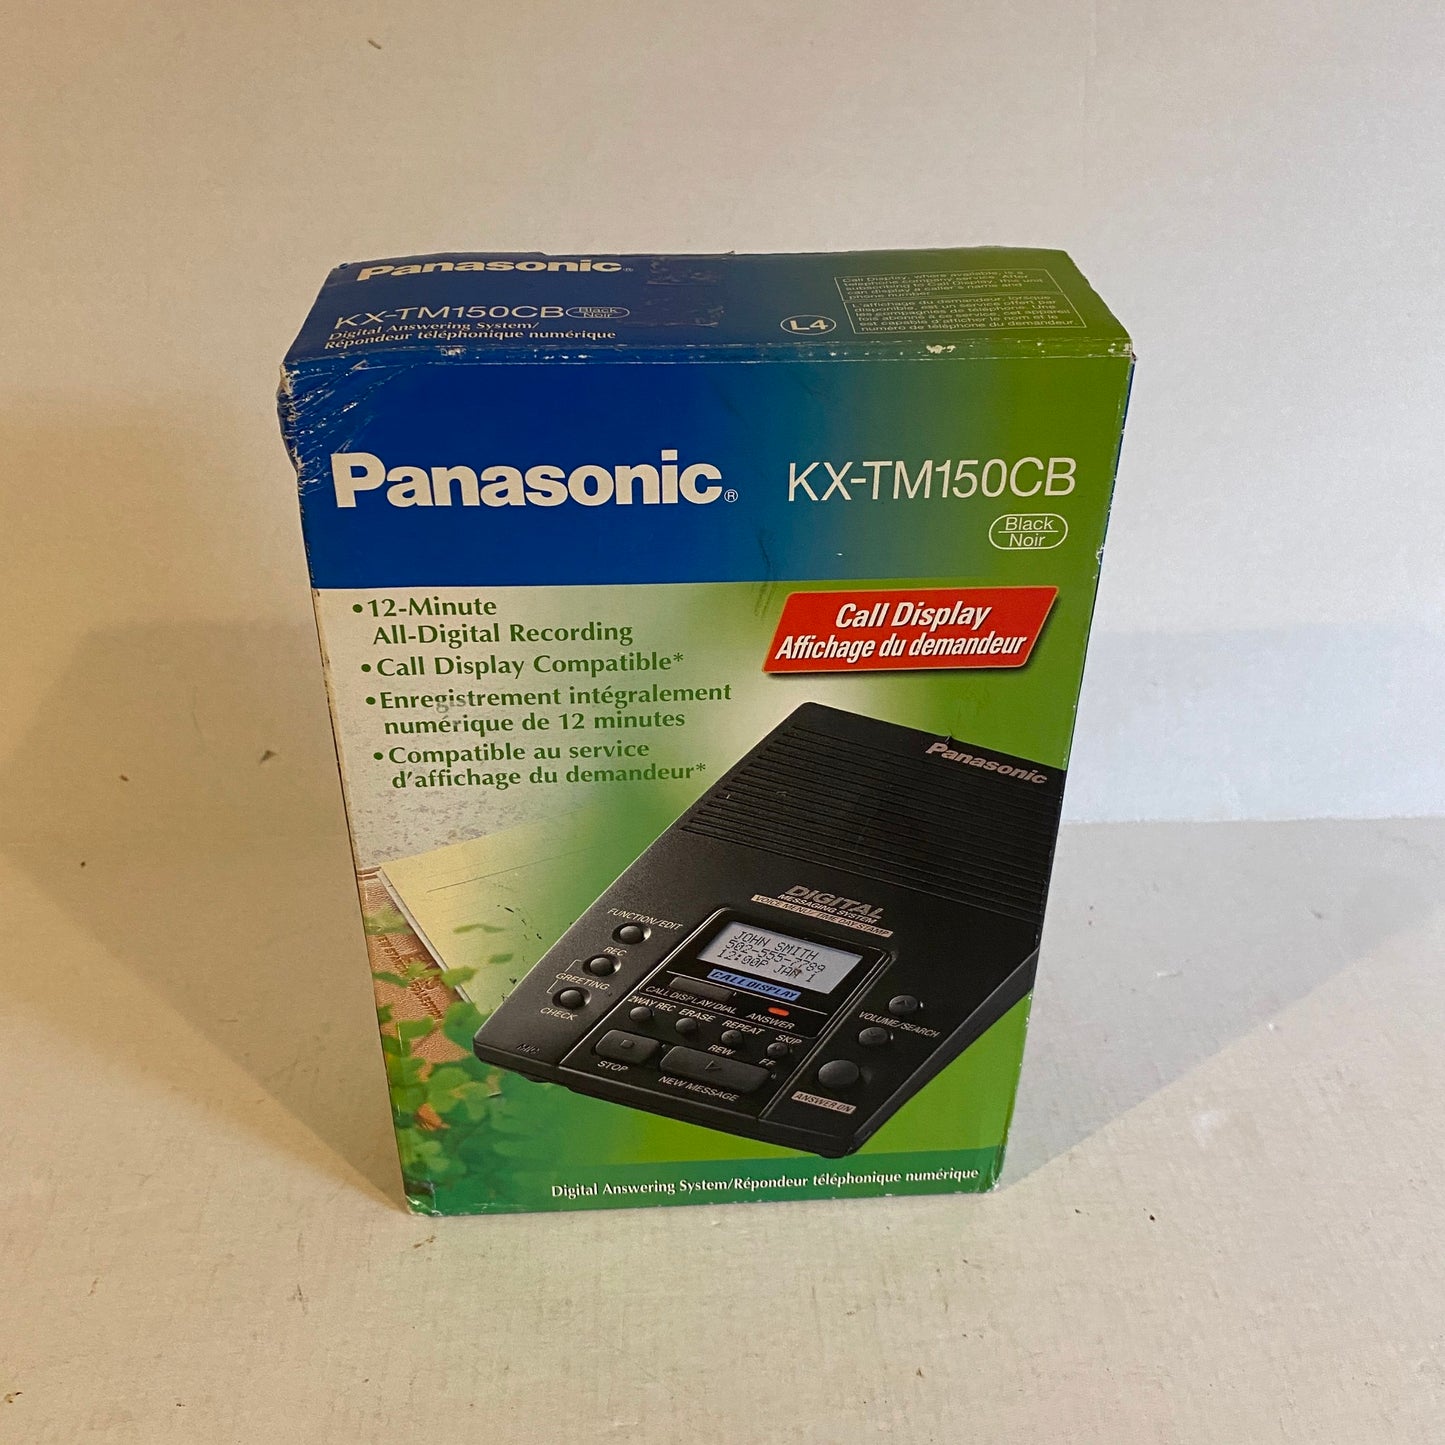 Panasonic Digital Answering Machine System - KX-TM150CB